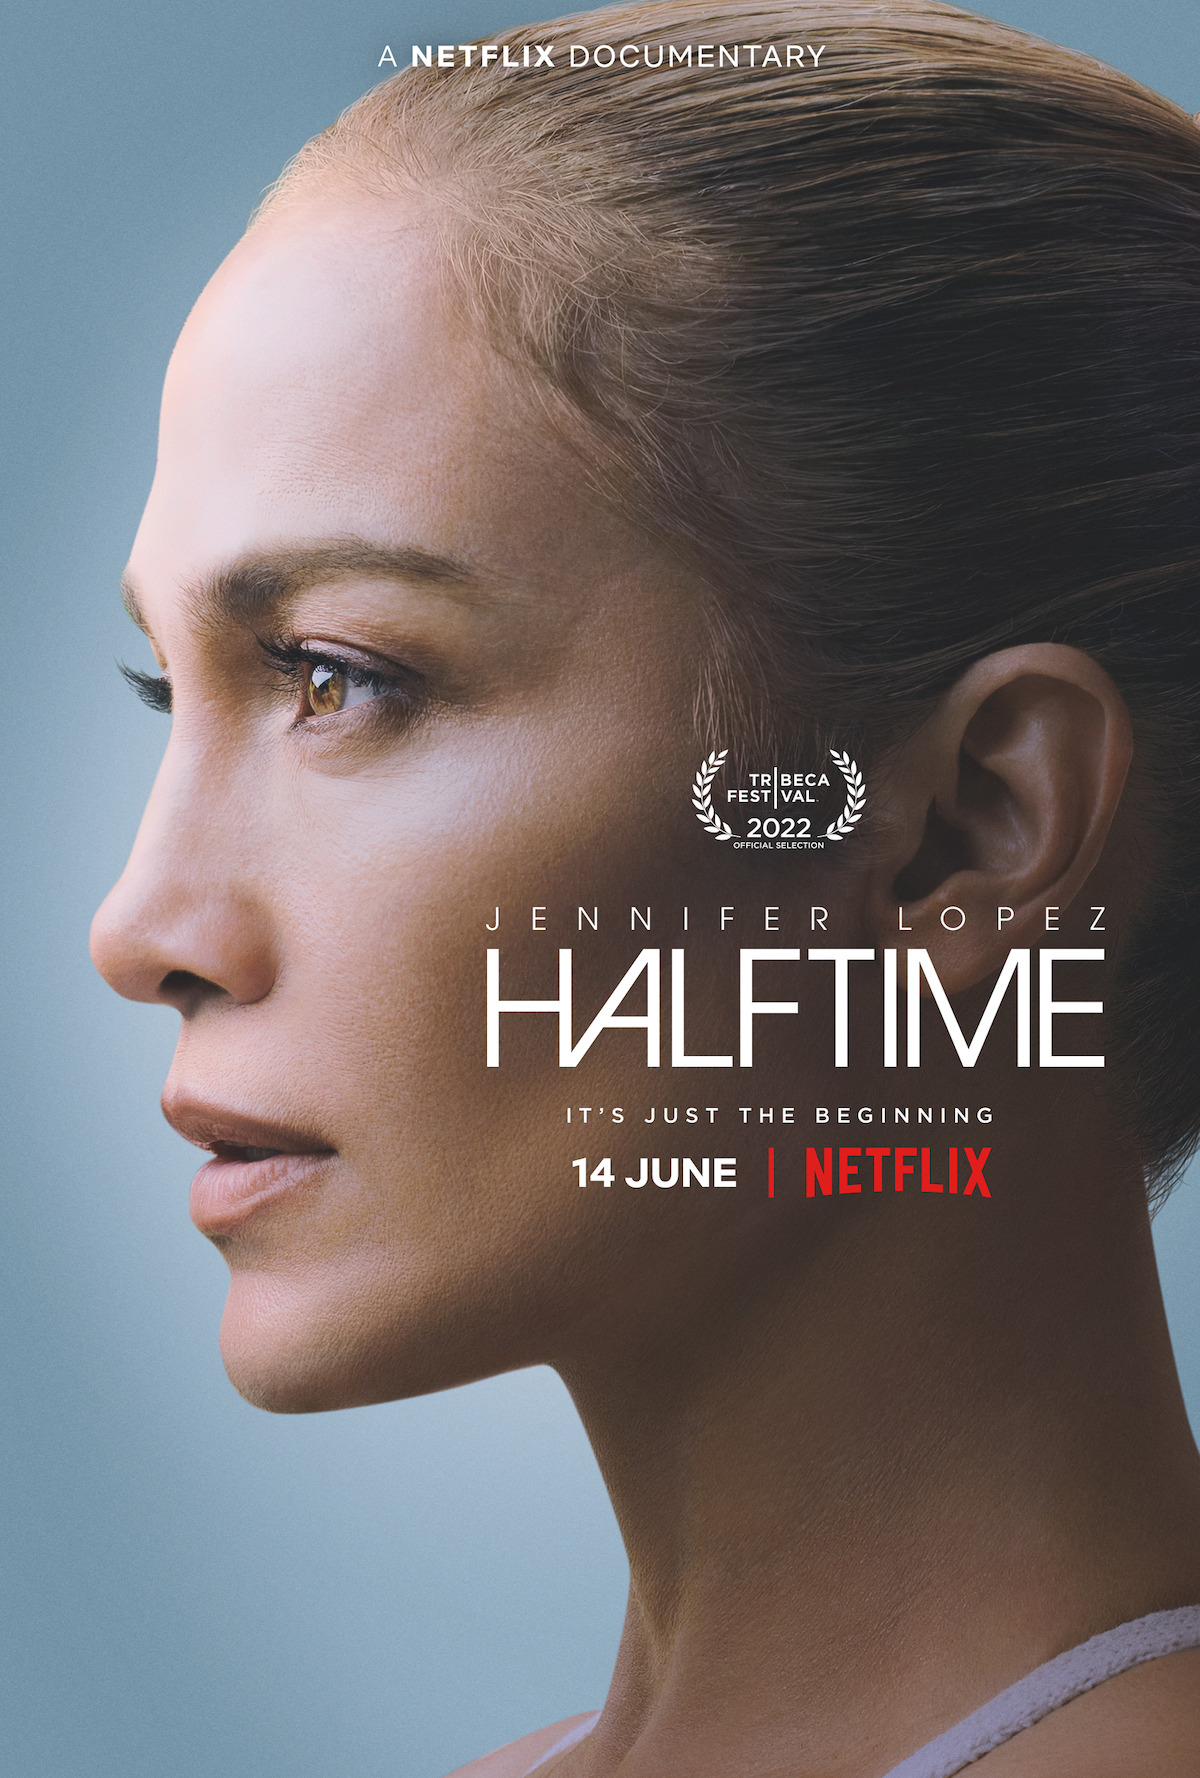 Jennifer Lopez Netflix Documentary Halftime Trailer Drops picture